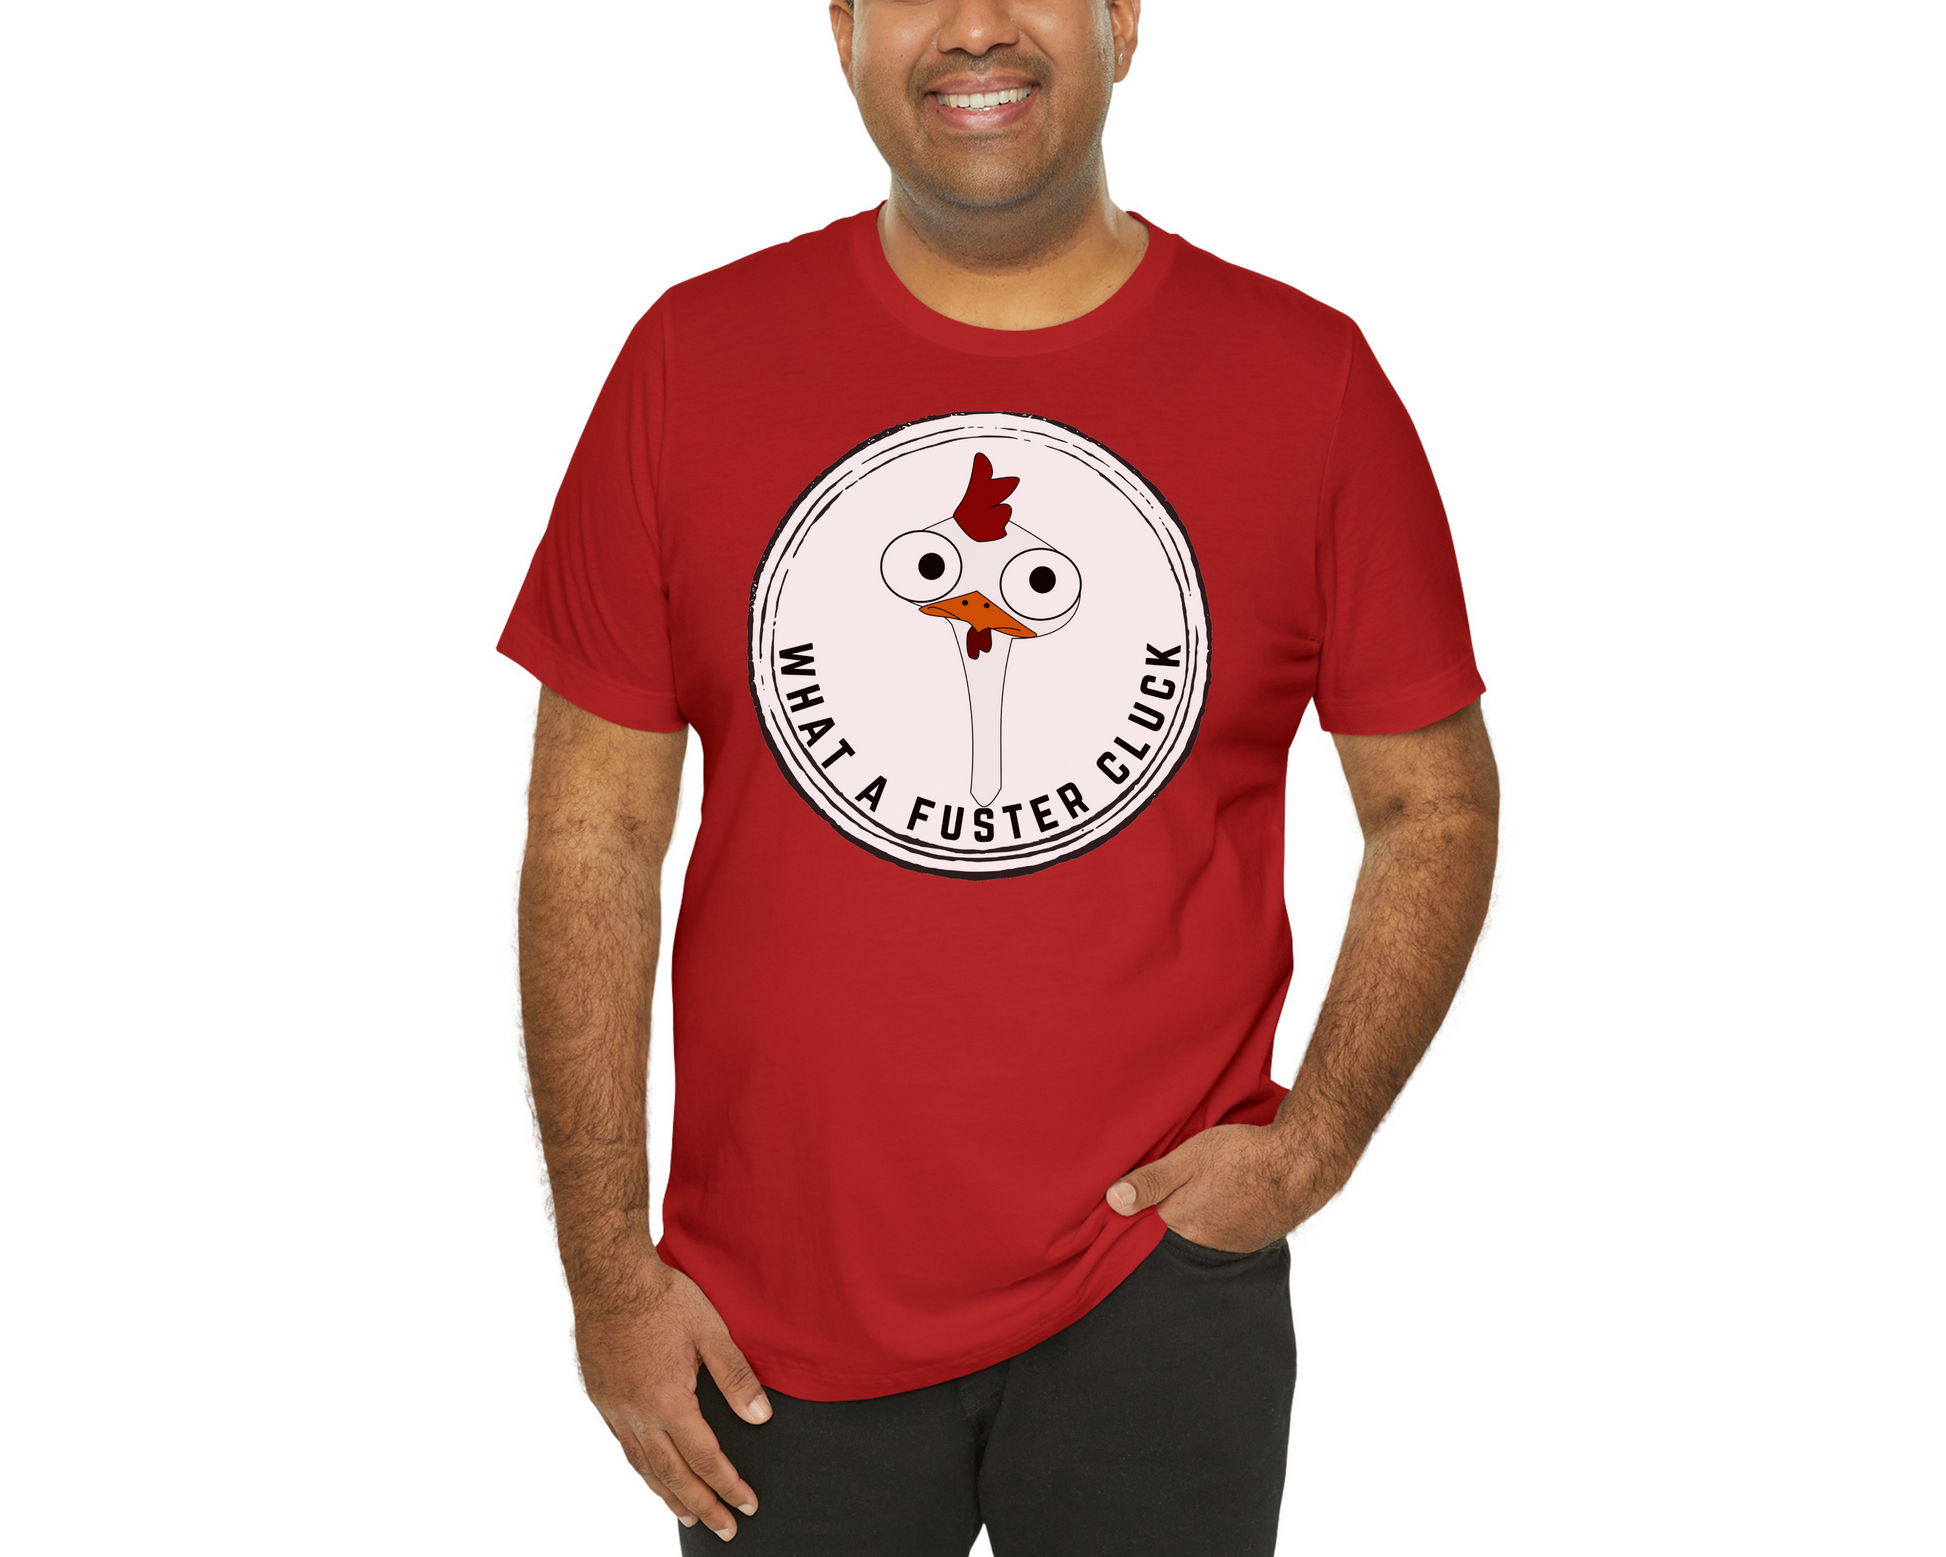 Fuster Cluck Red Chicken Shirt - Chicken Gift - funny shirt